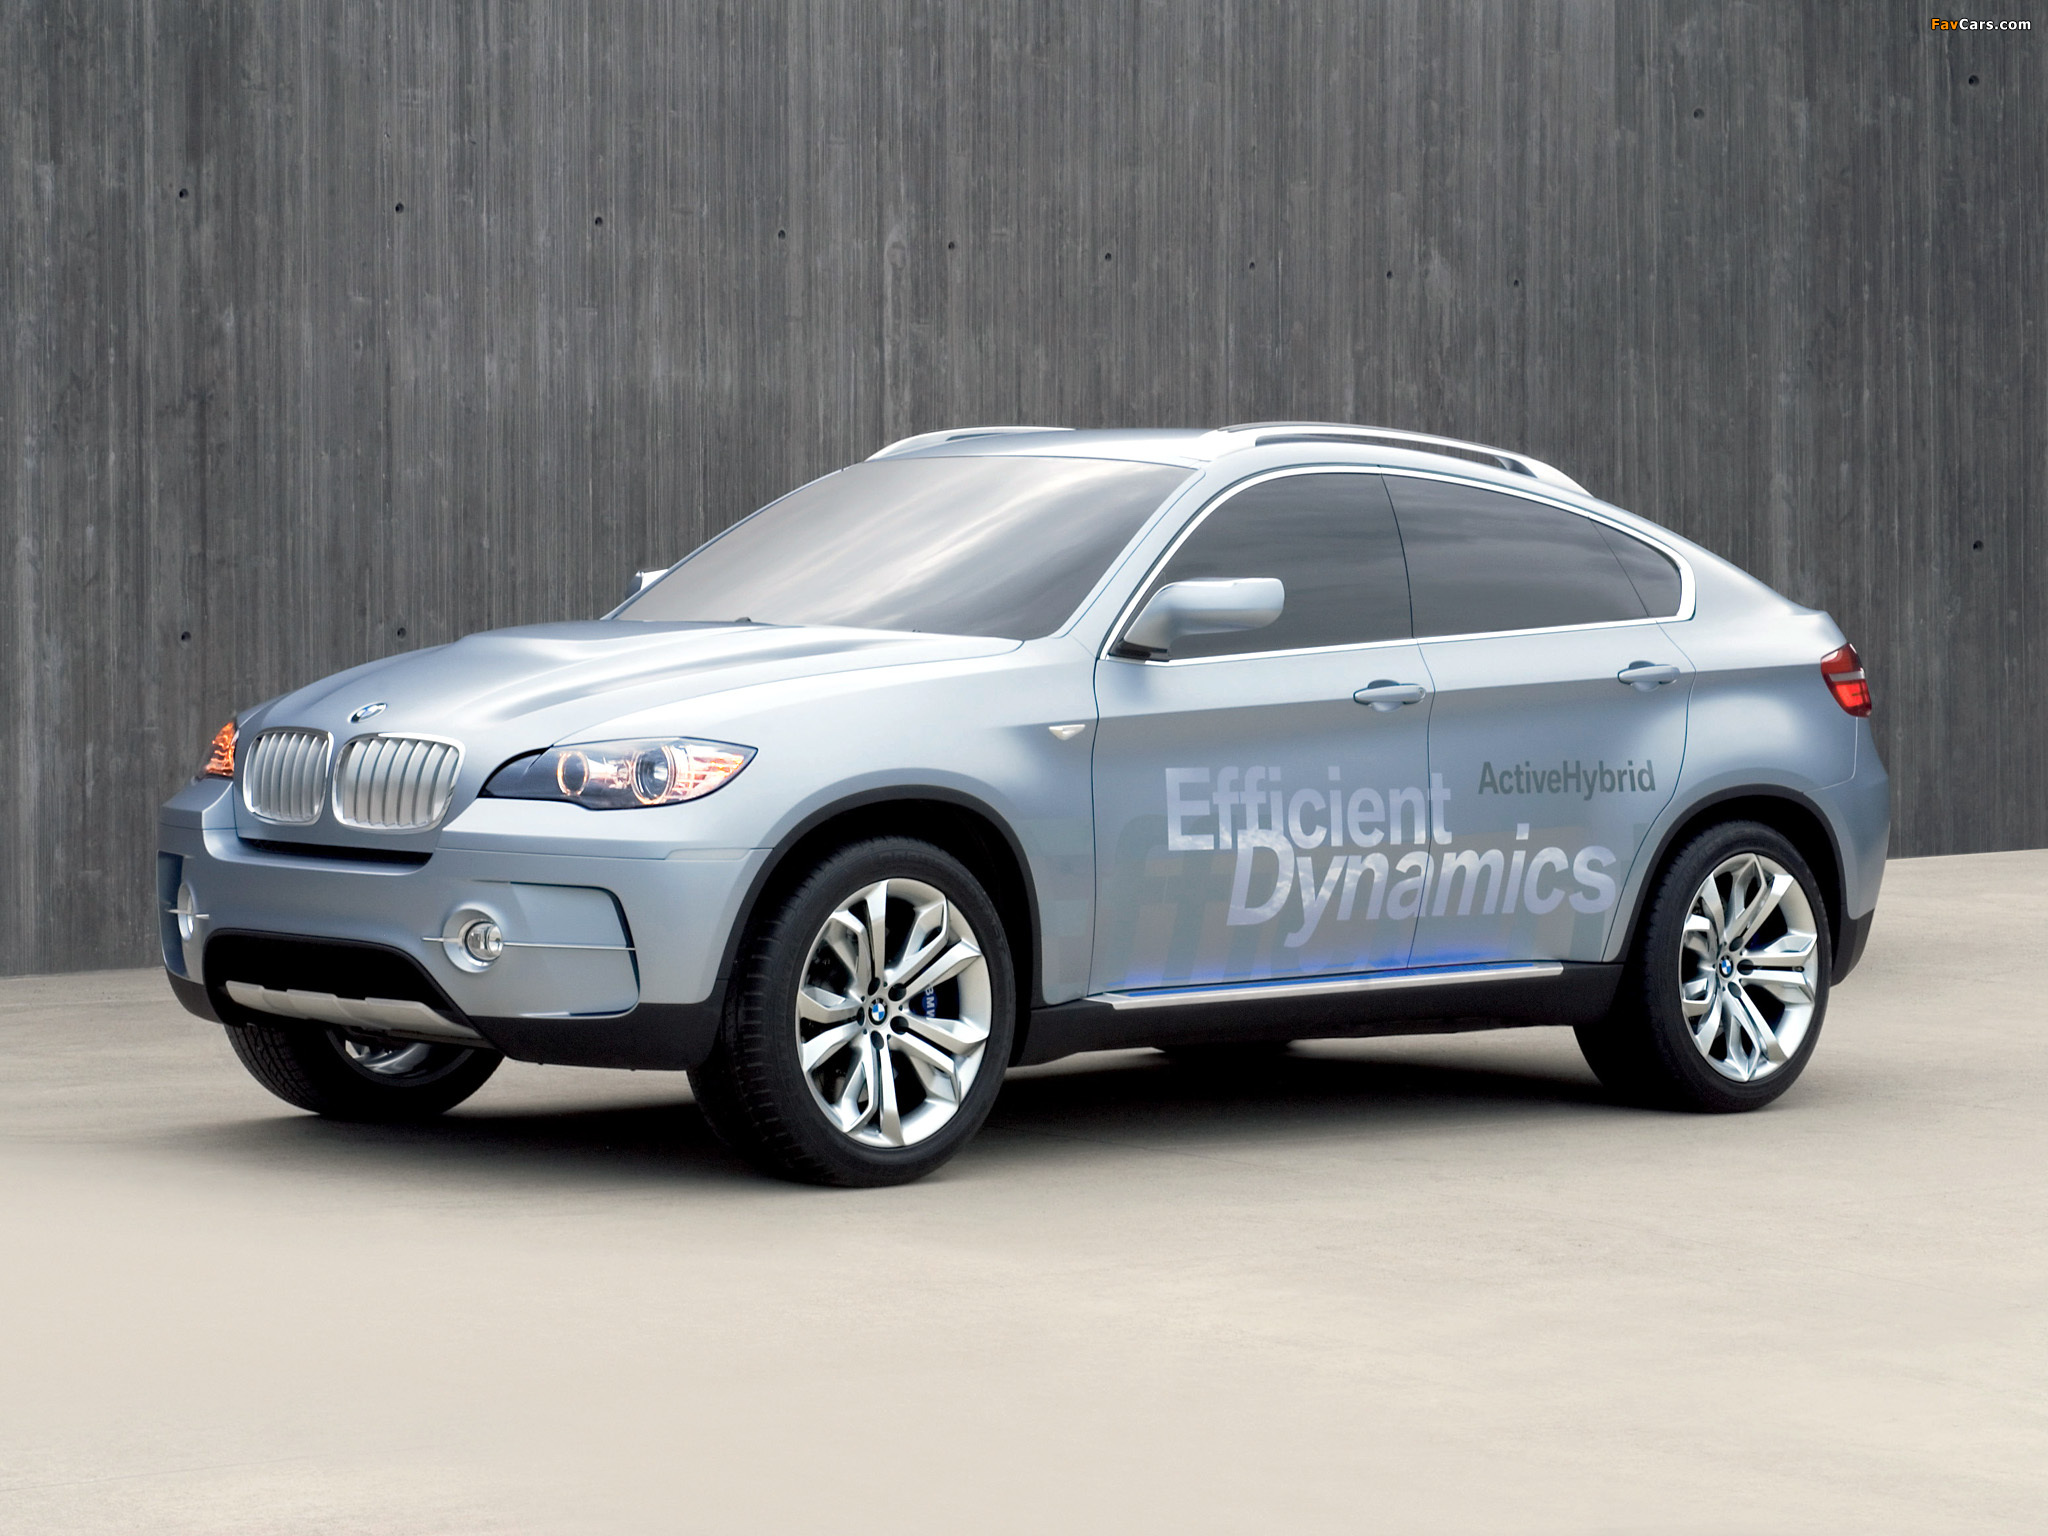 BMW X6 ActiveHybrid Concept (72) 2007 images (2048 x 1536)